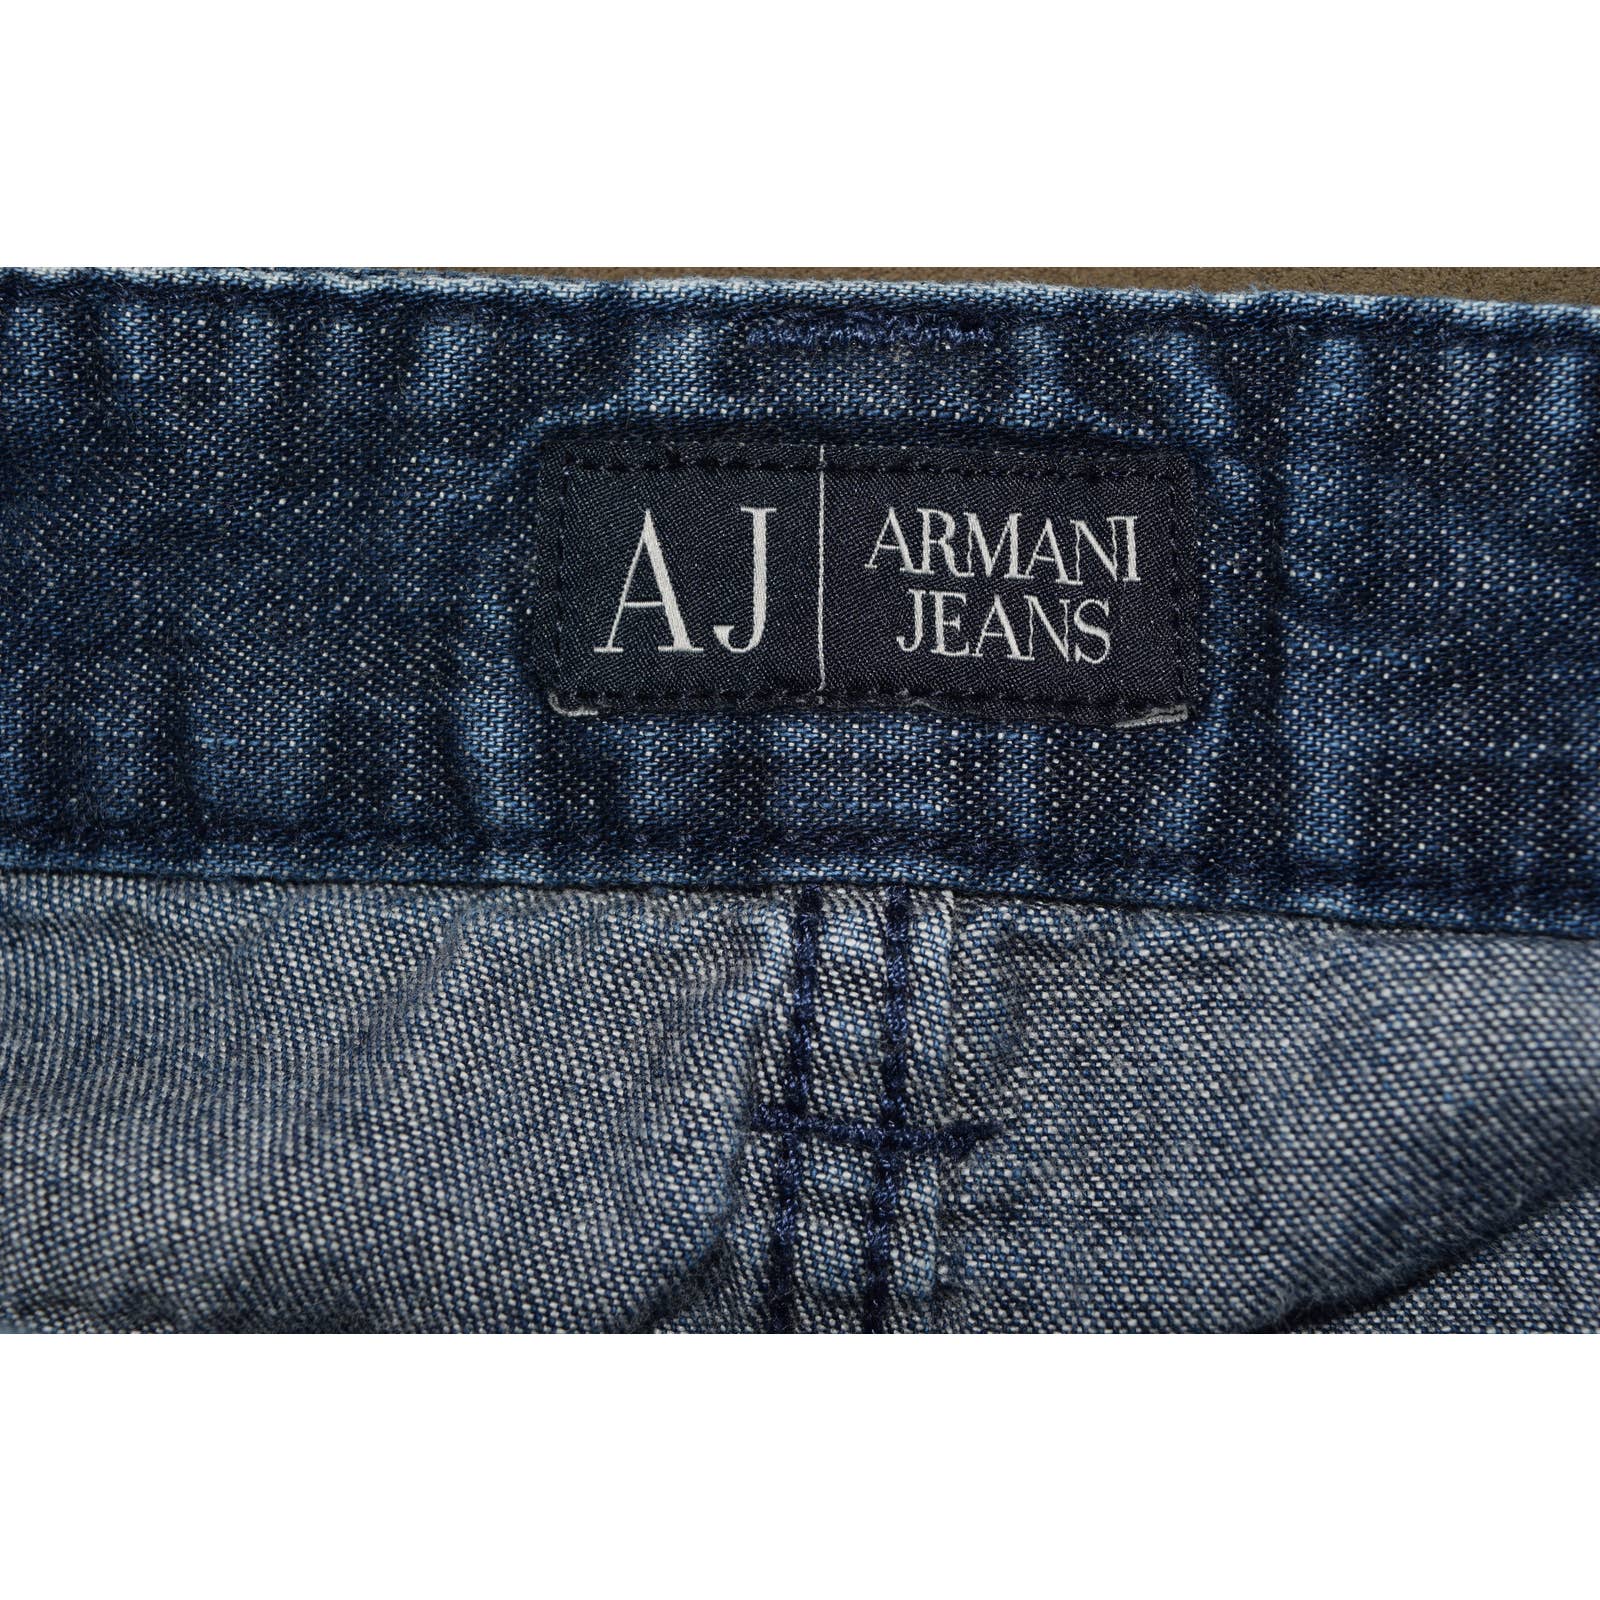 Armani Jeans Medium Wash Denim Jeans - 30